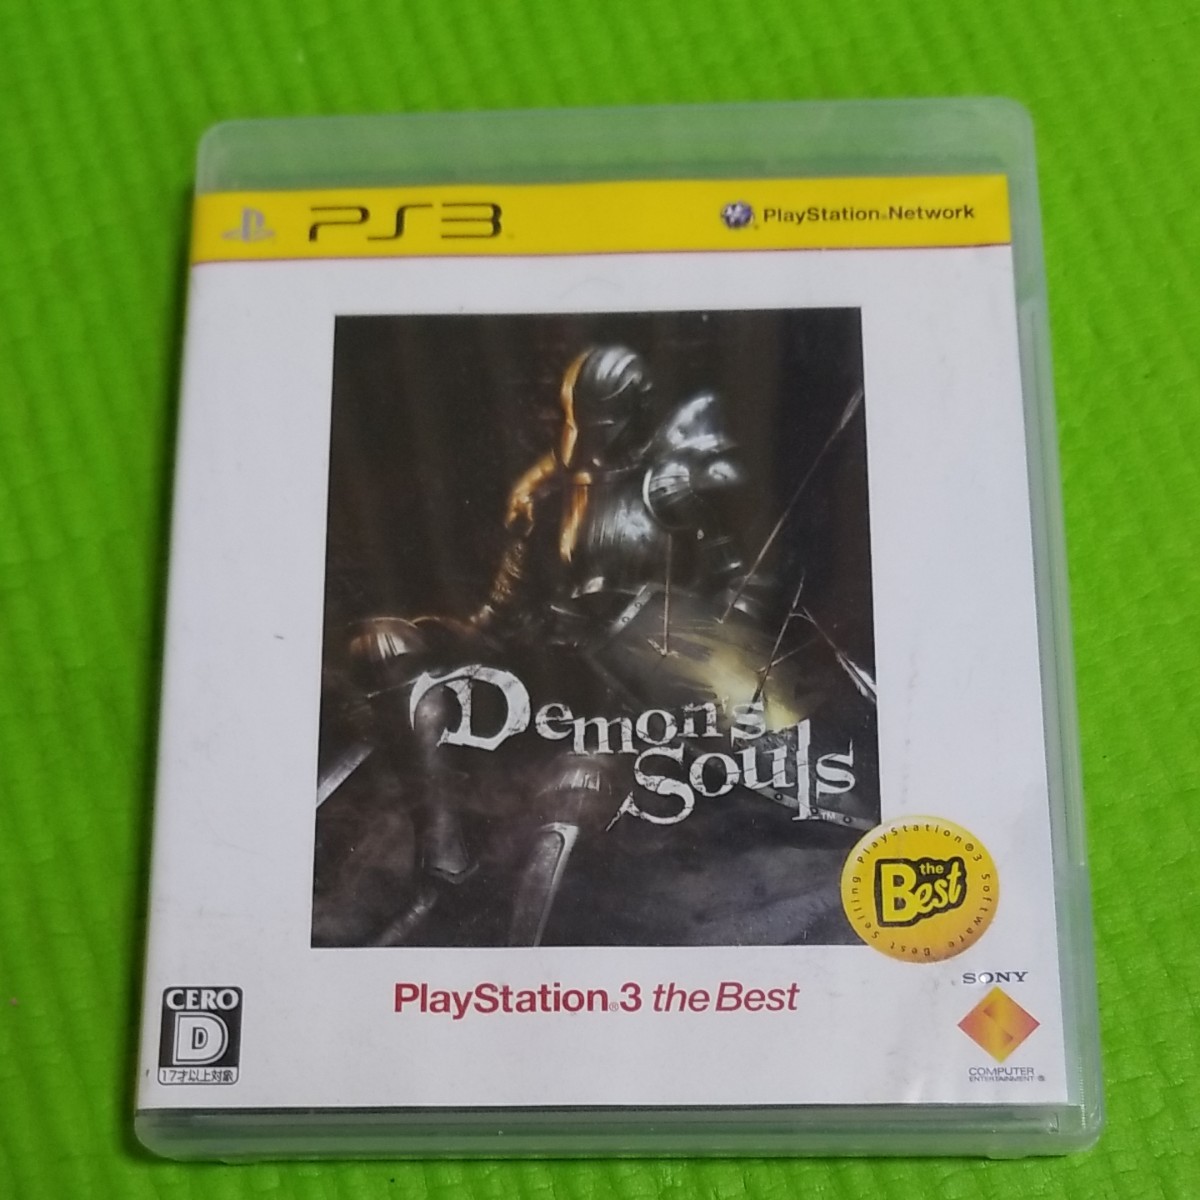 【PS3】 Demon’s Souls [PS3 the Best］